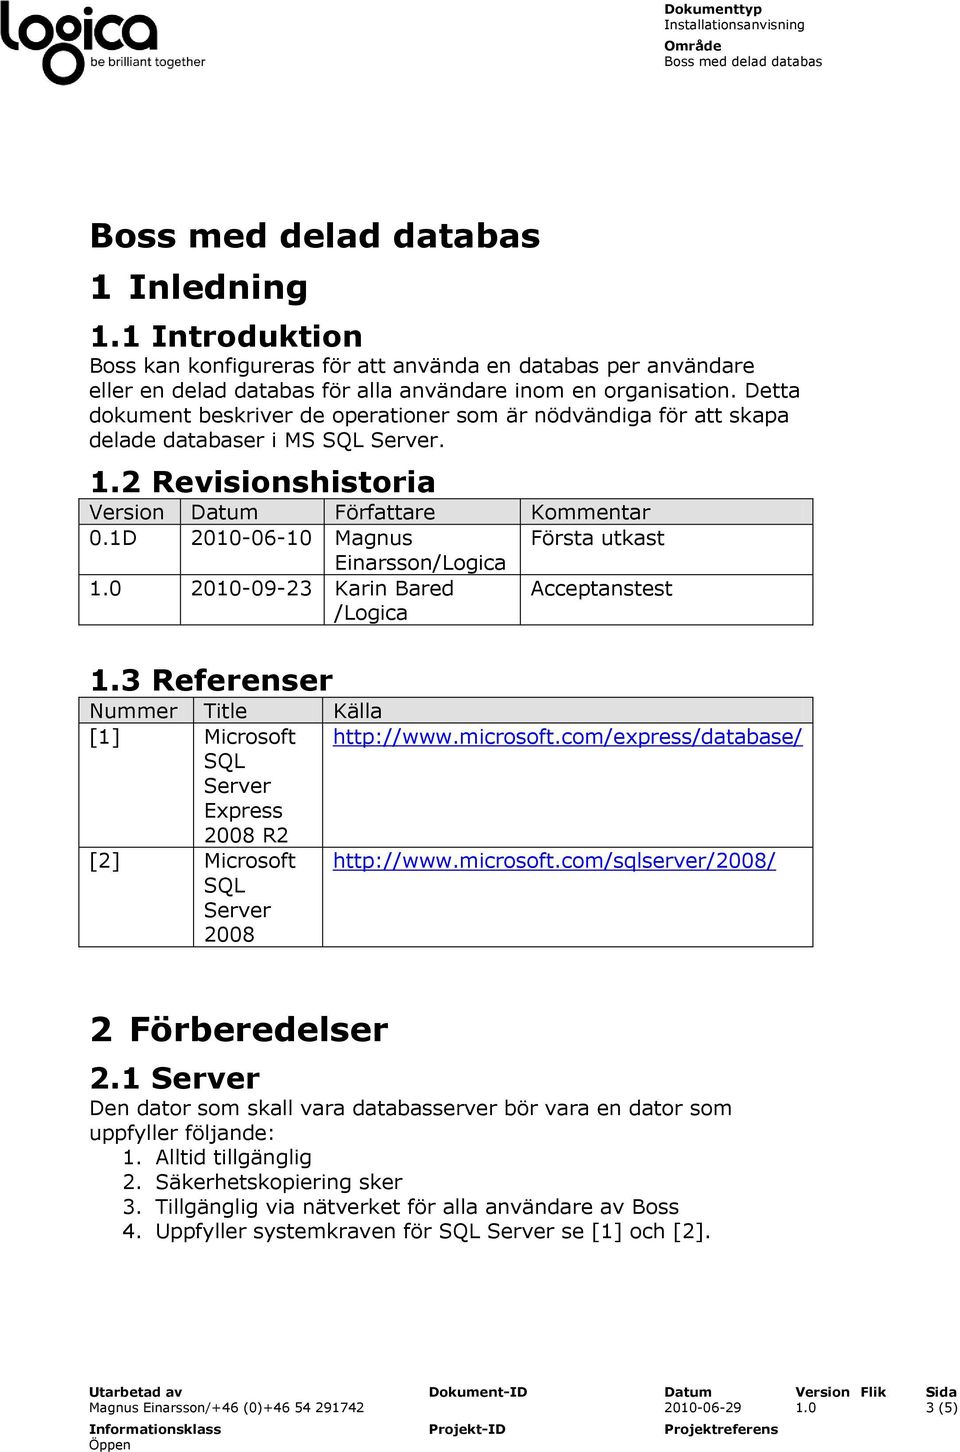 1D 2010-06-10 Magnus Första utkast Einarsson/Logica 1.0 2010-09-23 Karin Bared /Logica Acceptanstest 1.3 Referenser Nummer Title Källa [1] Microsoft http://www.microsoft.